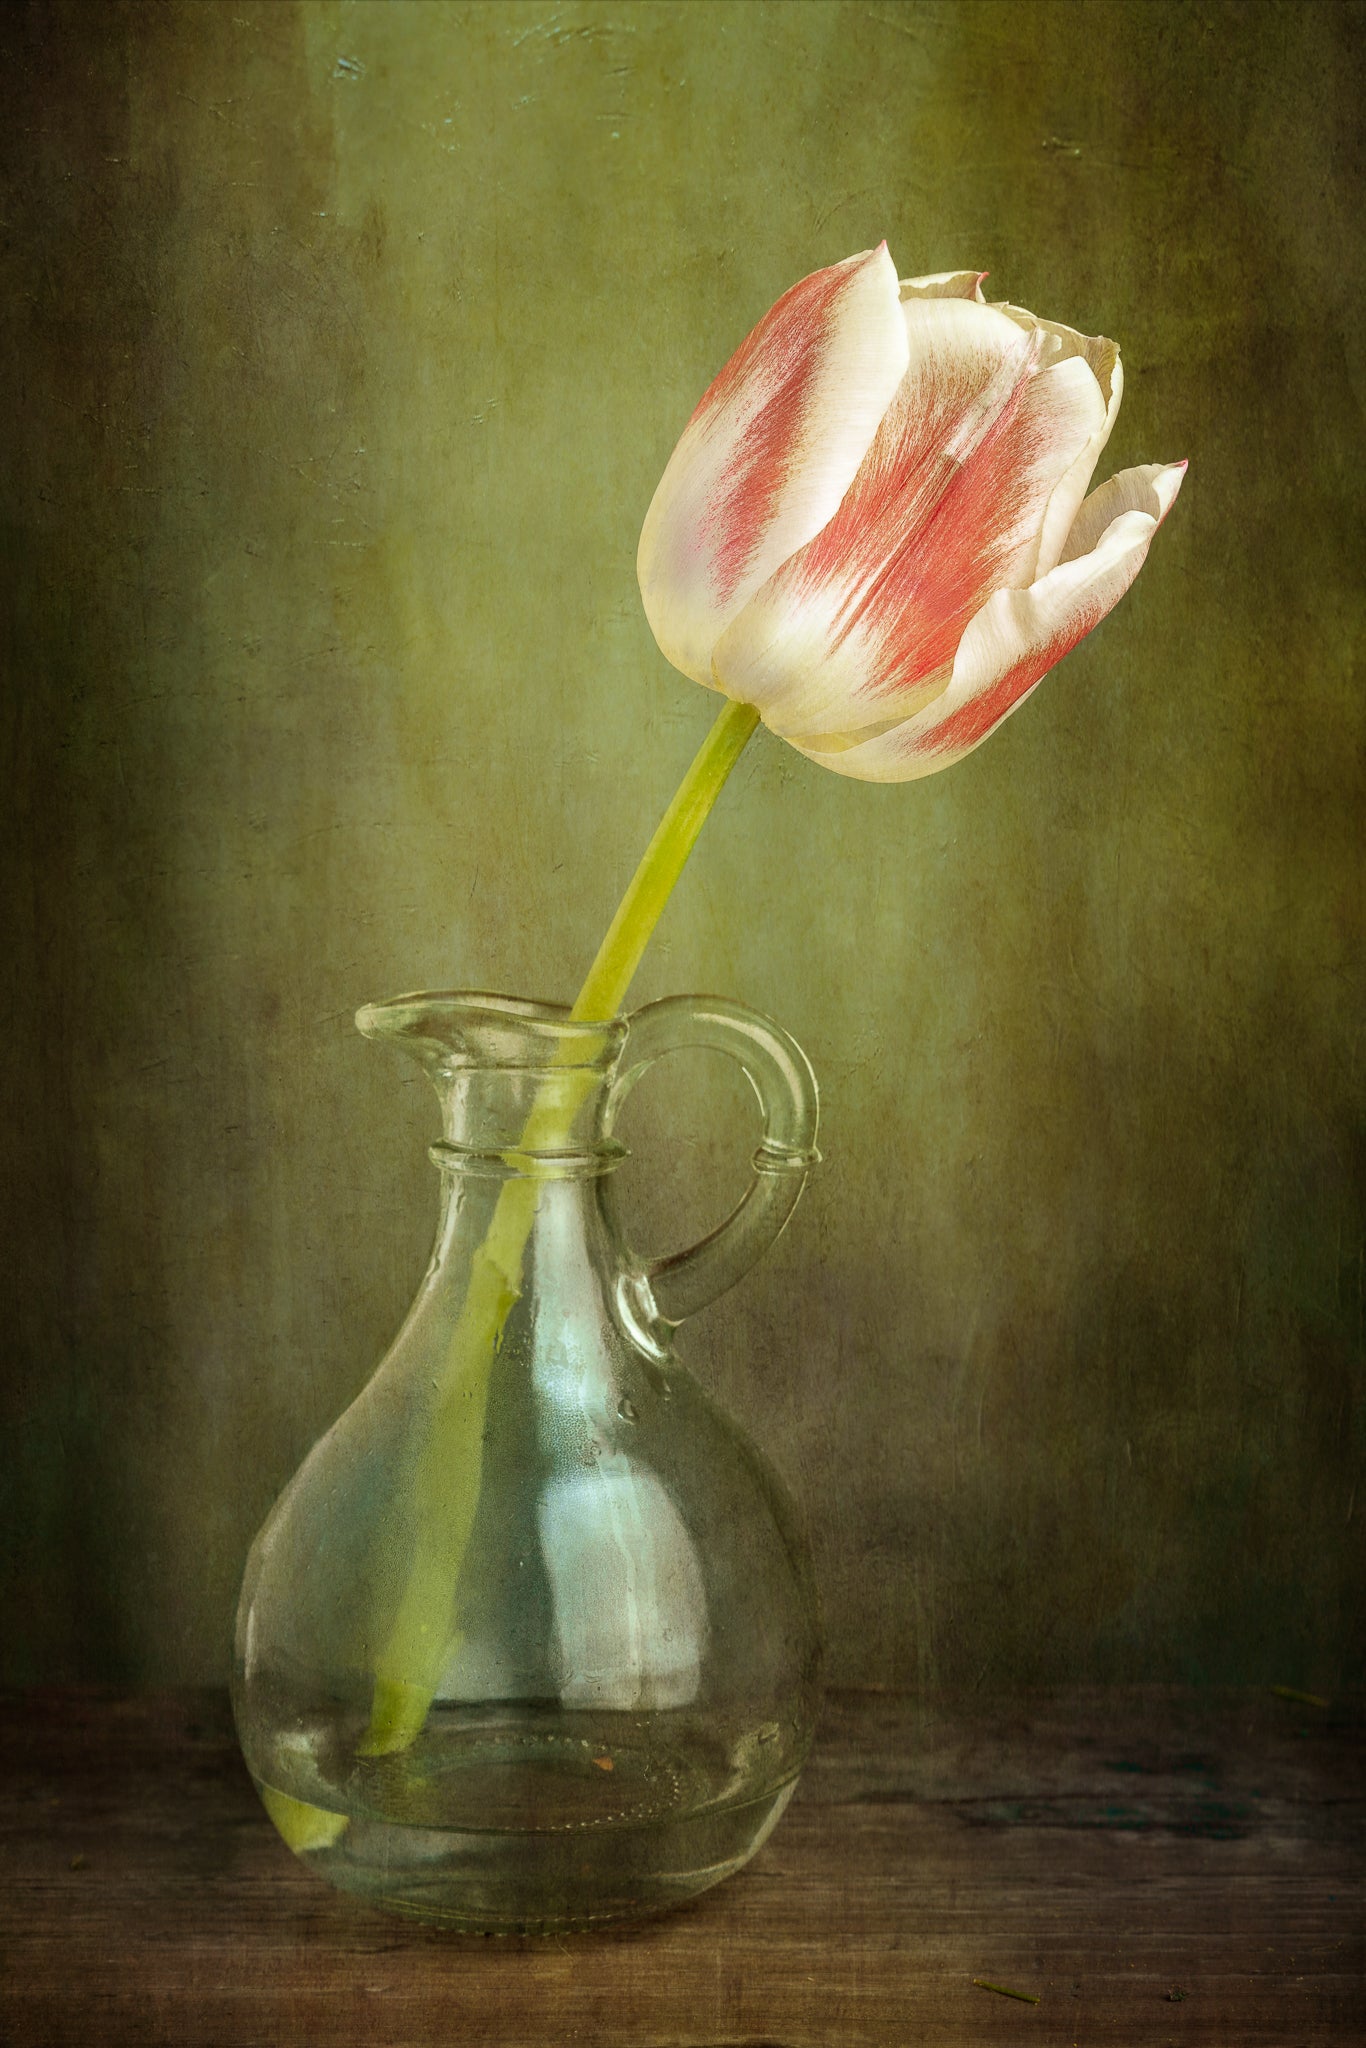 Fine art flower photograph of a tulip in a jar titled "Tulip in Pitcher" by Cameron Dreaux of Dreaux Fine Art.